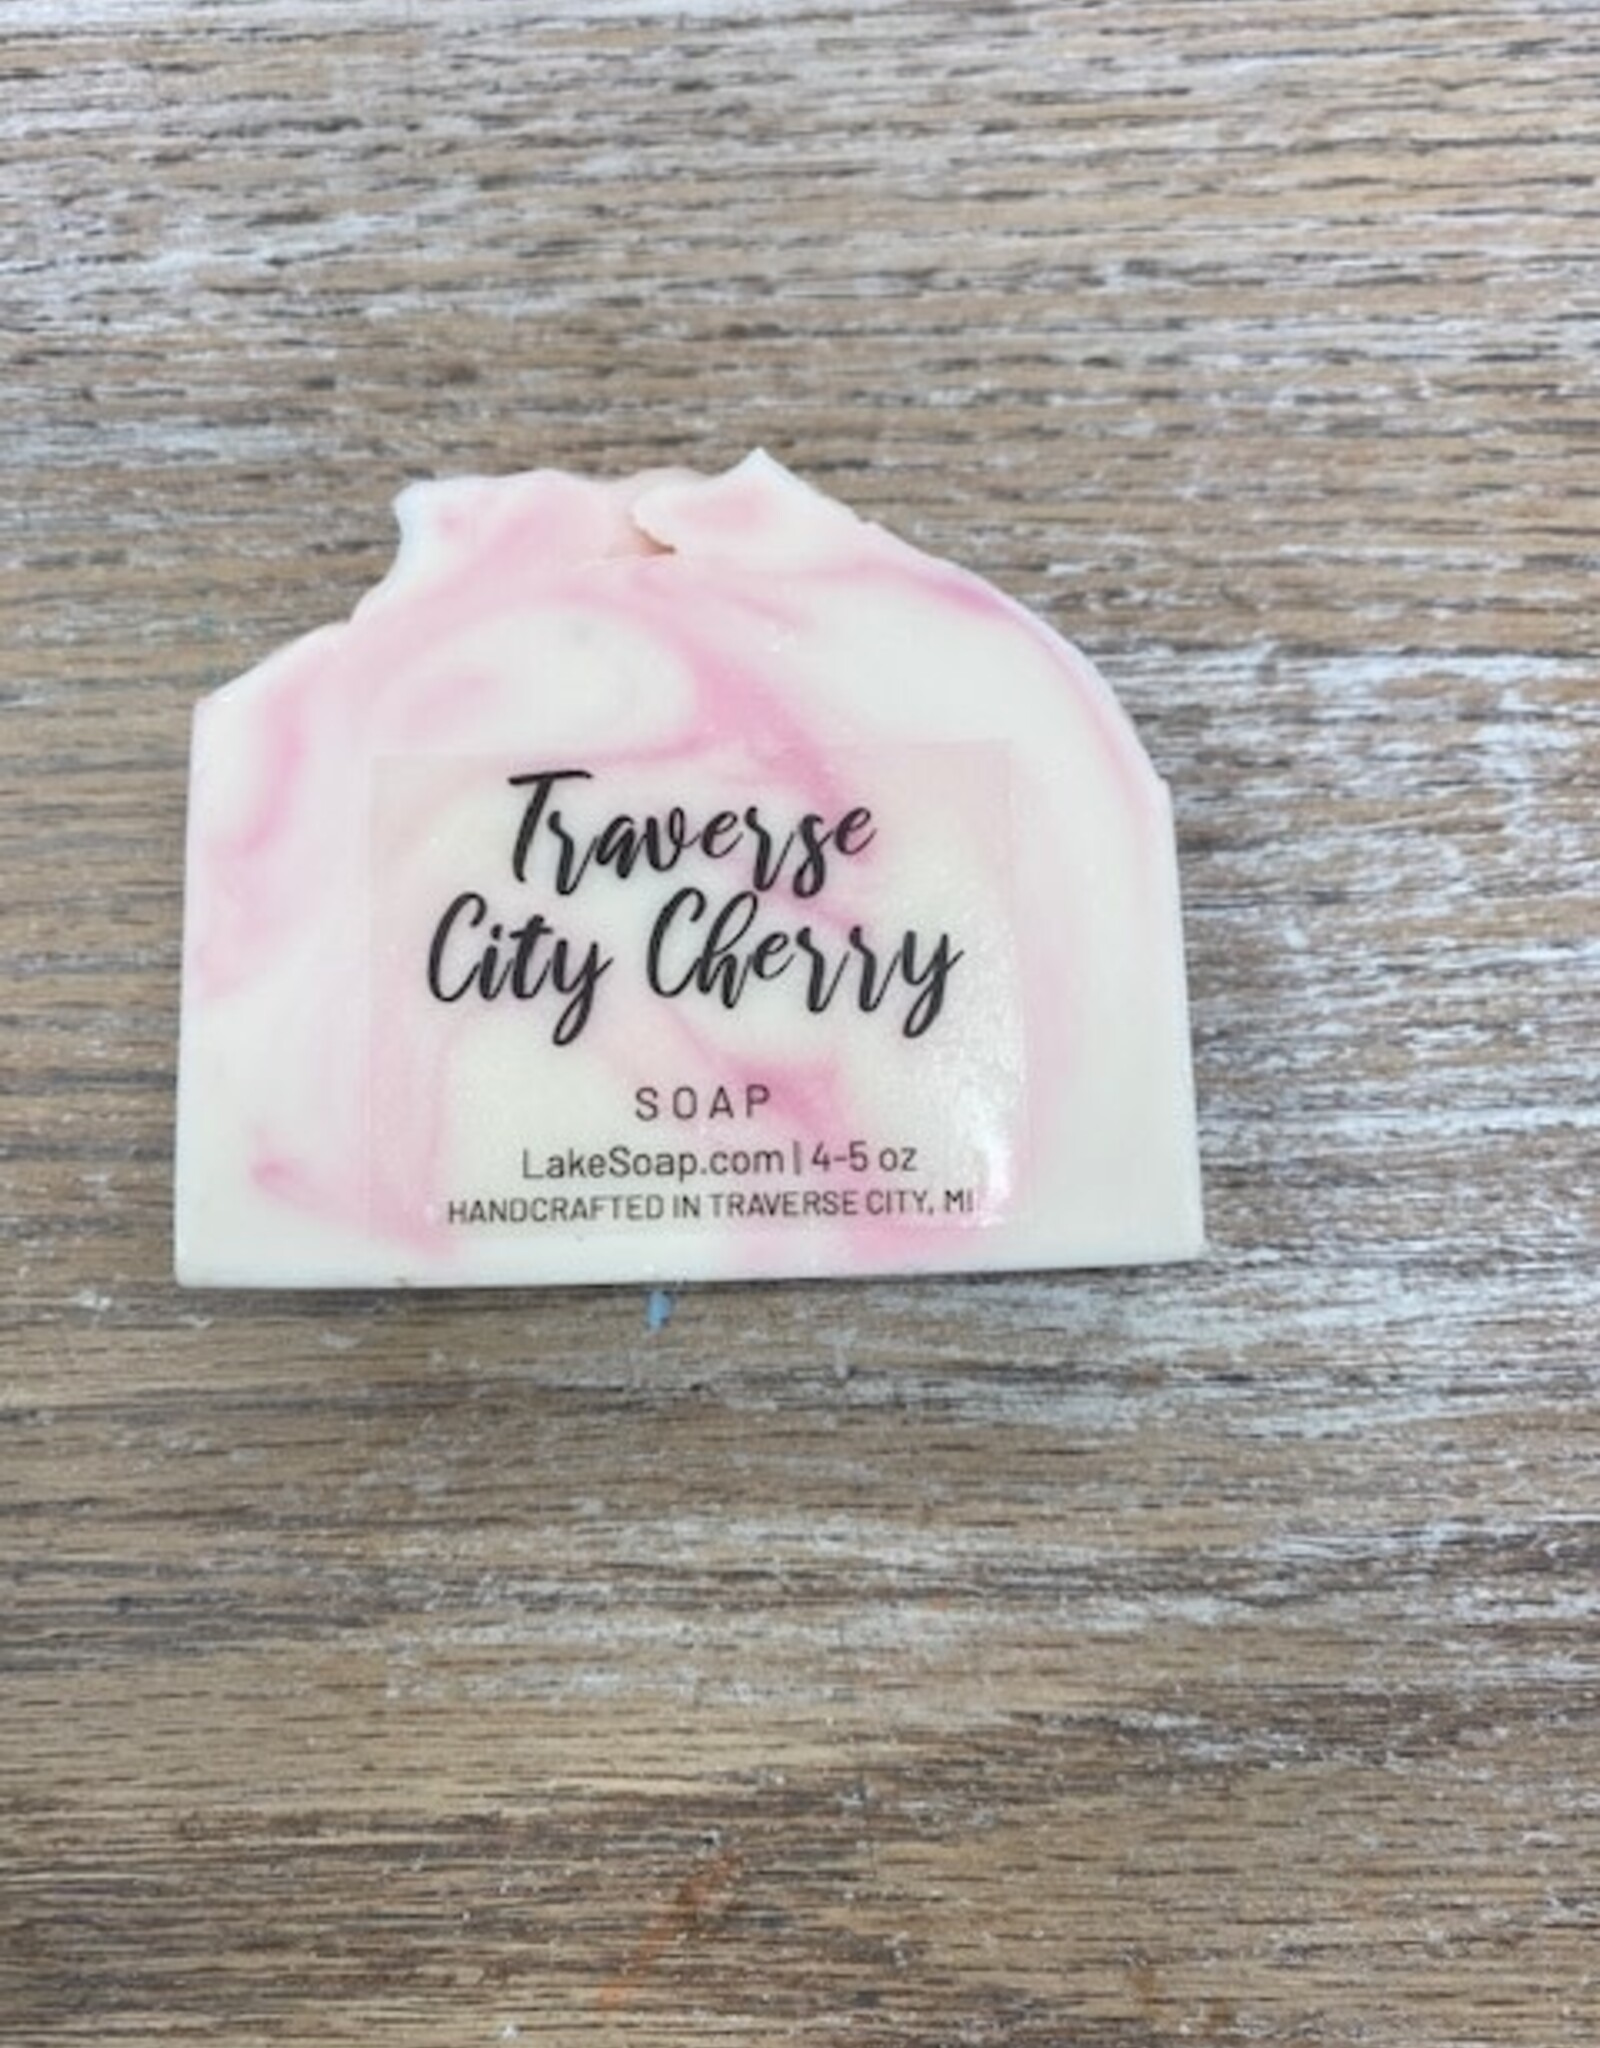 Beauty Lake Soap, Traverse City Cherry